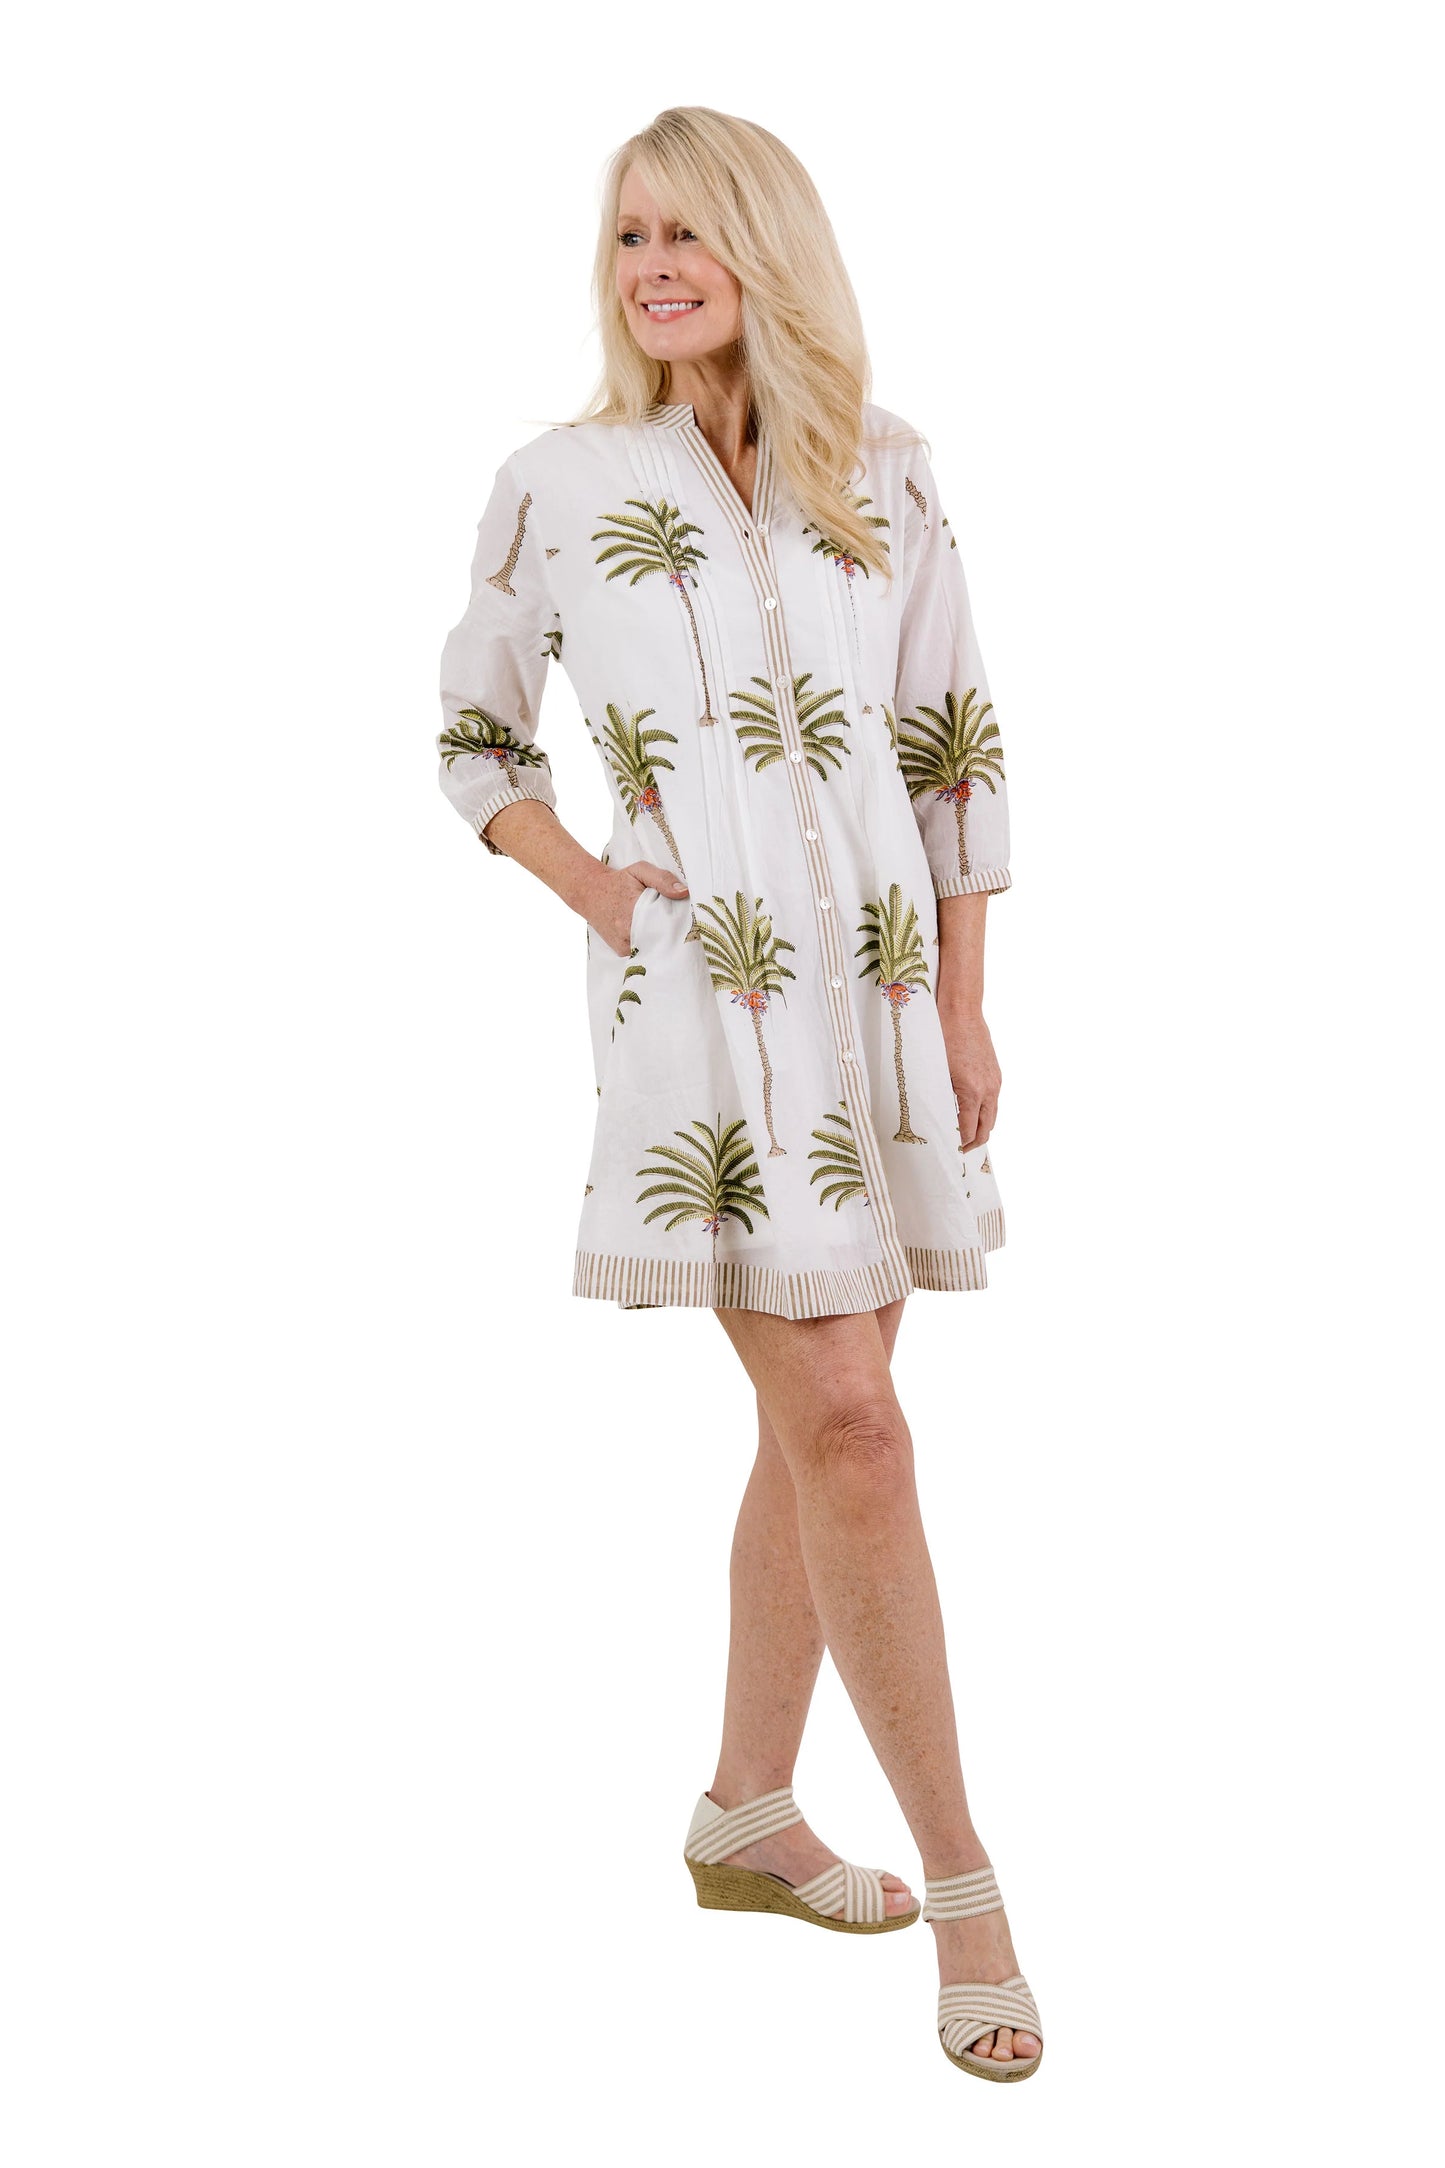 Charleston Shoe Co. Alexis Dress - White Palm